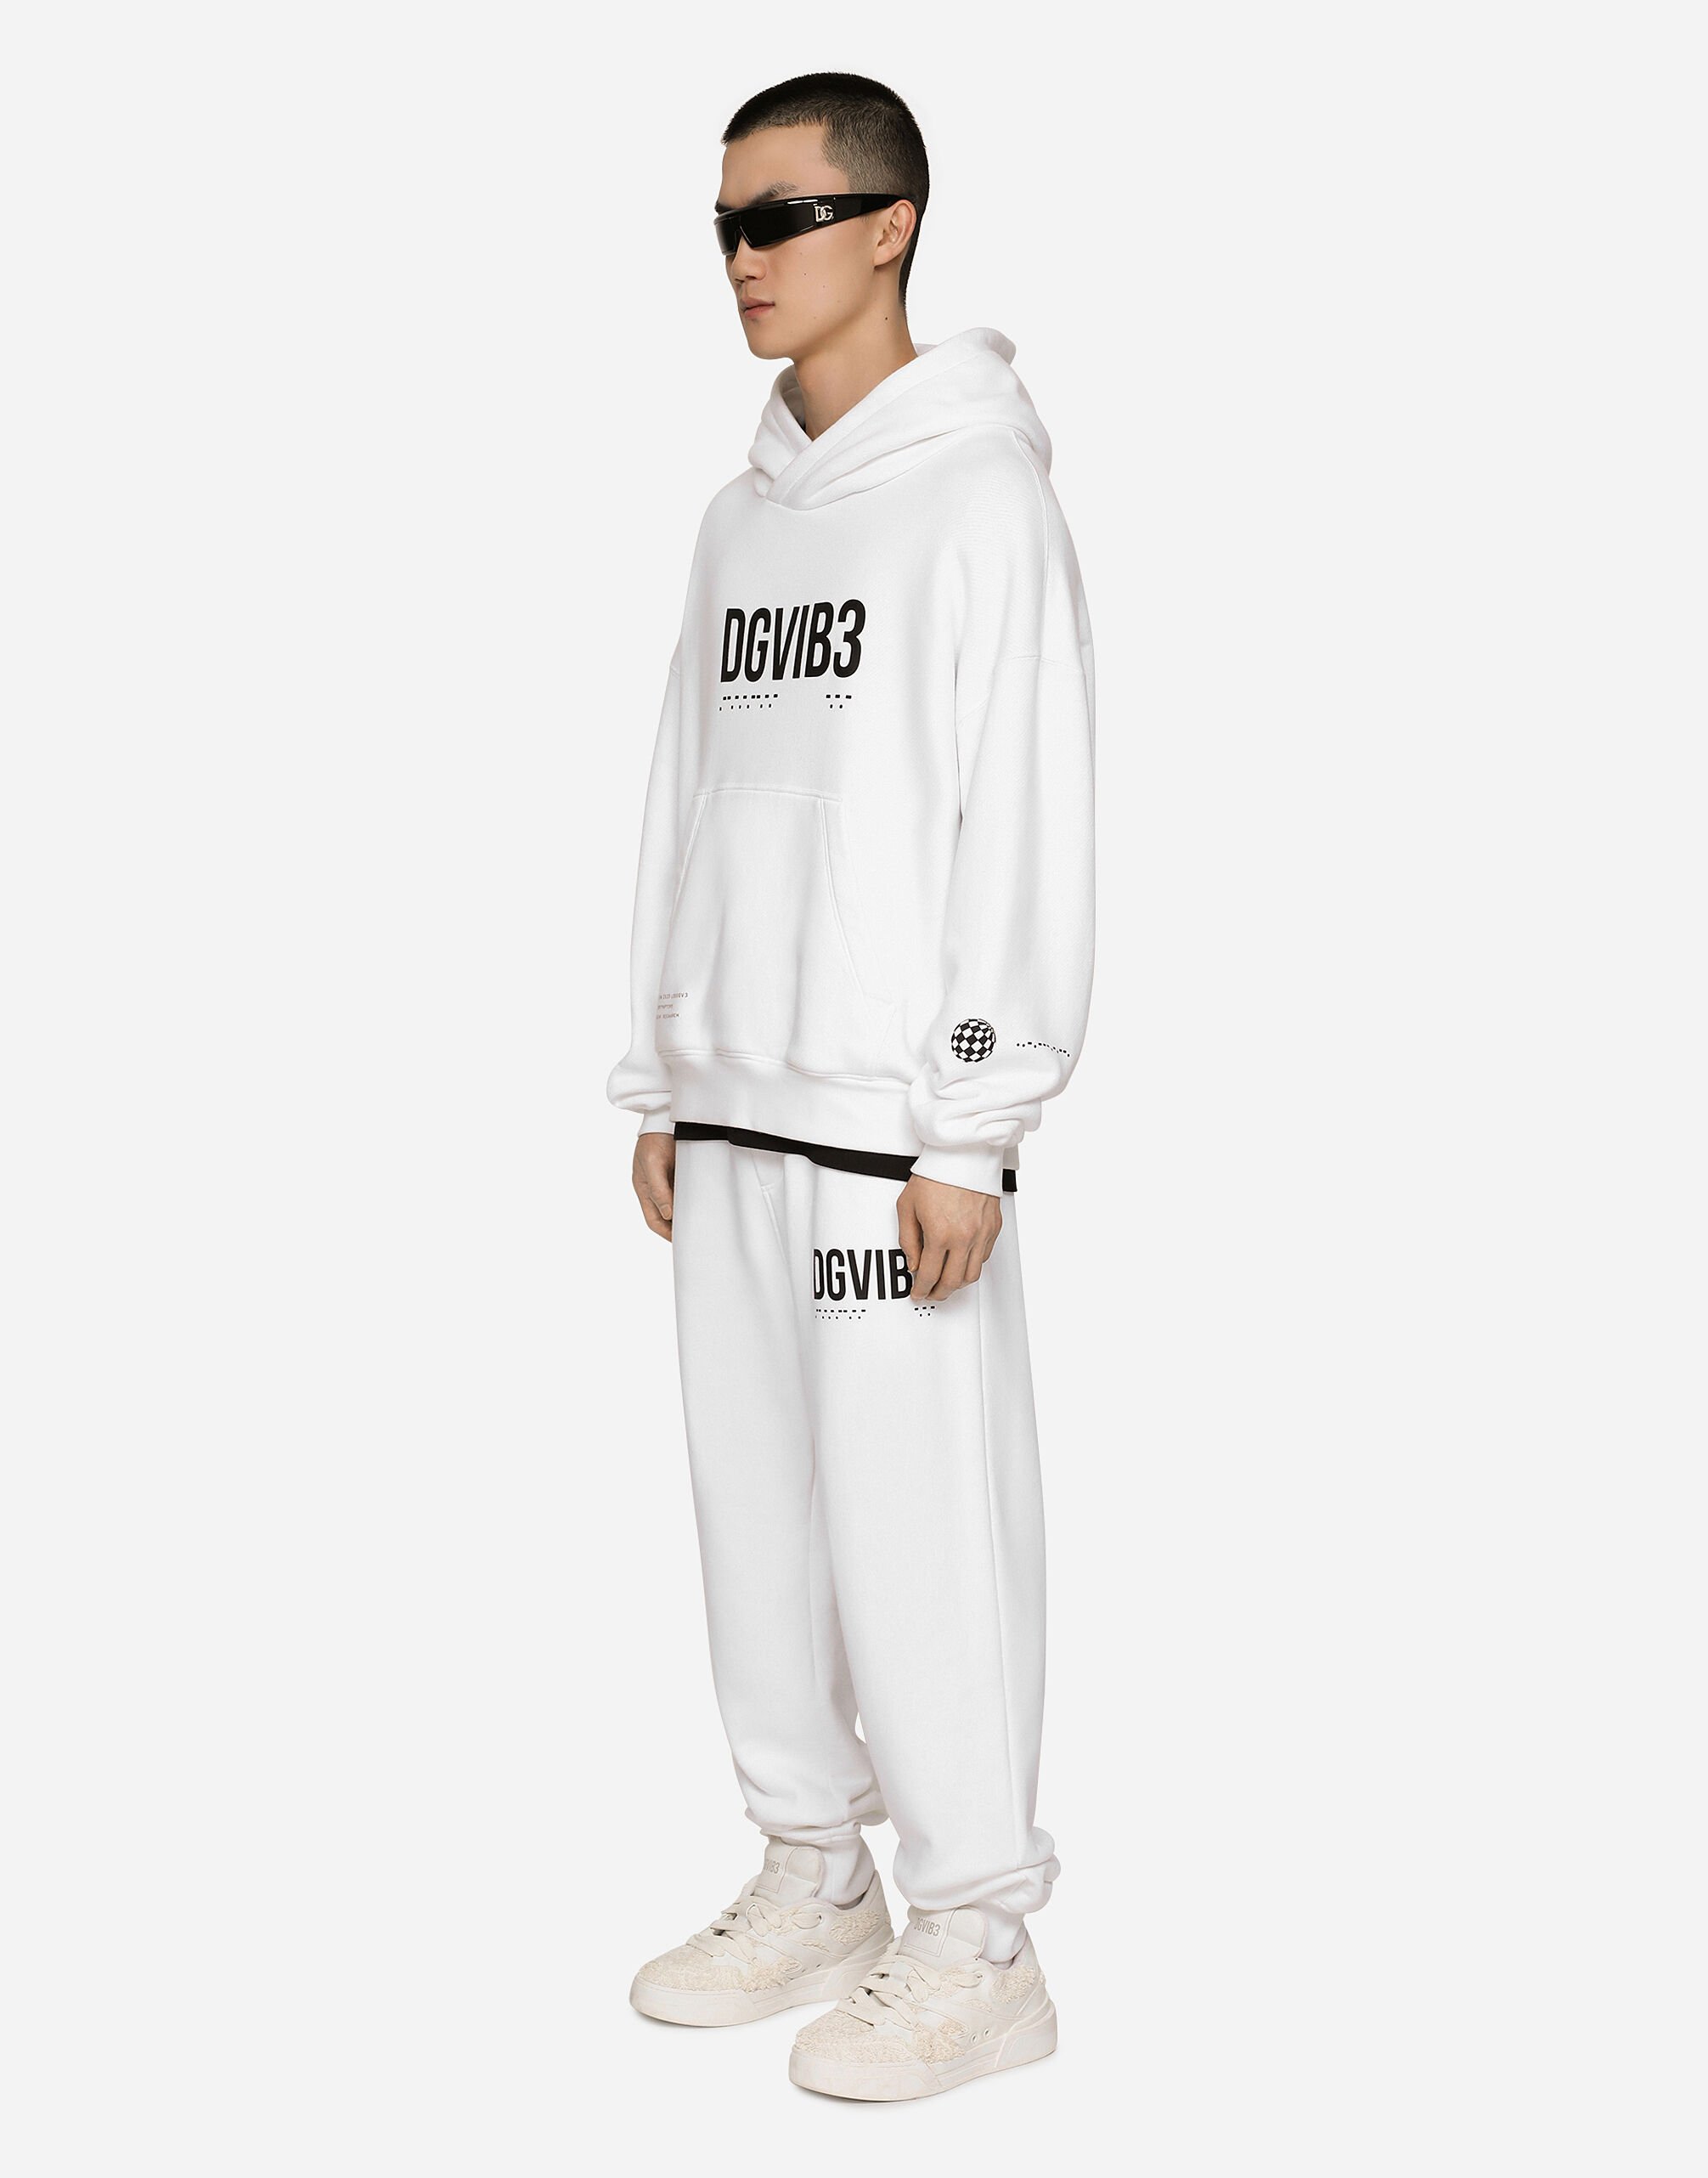 Dolce & Gabbana Jersey jogging pants with DGVIB3 print and logo White G9AQVTG7K3H